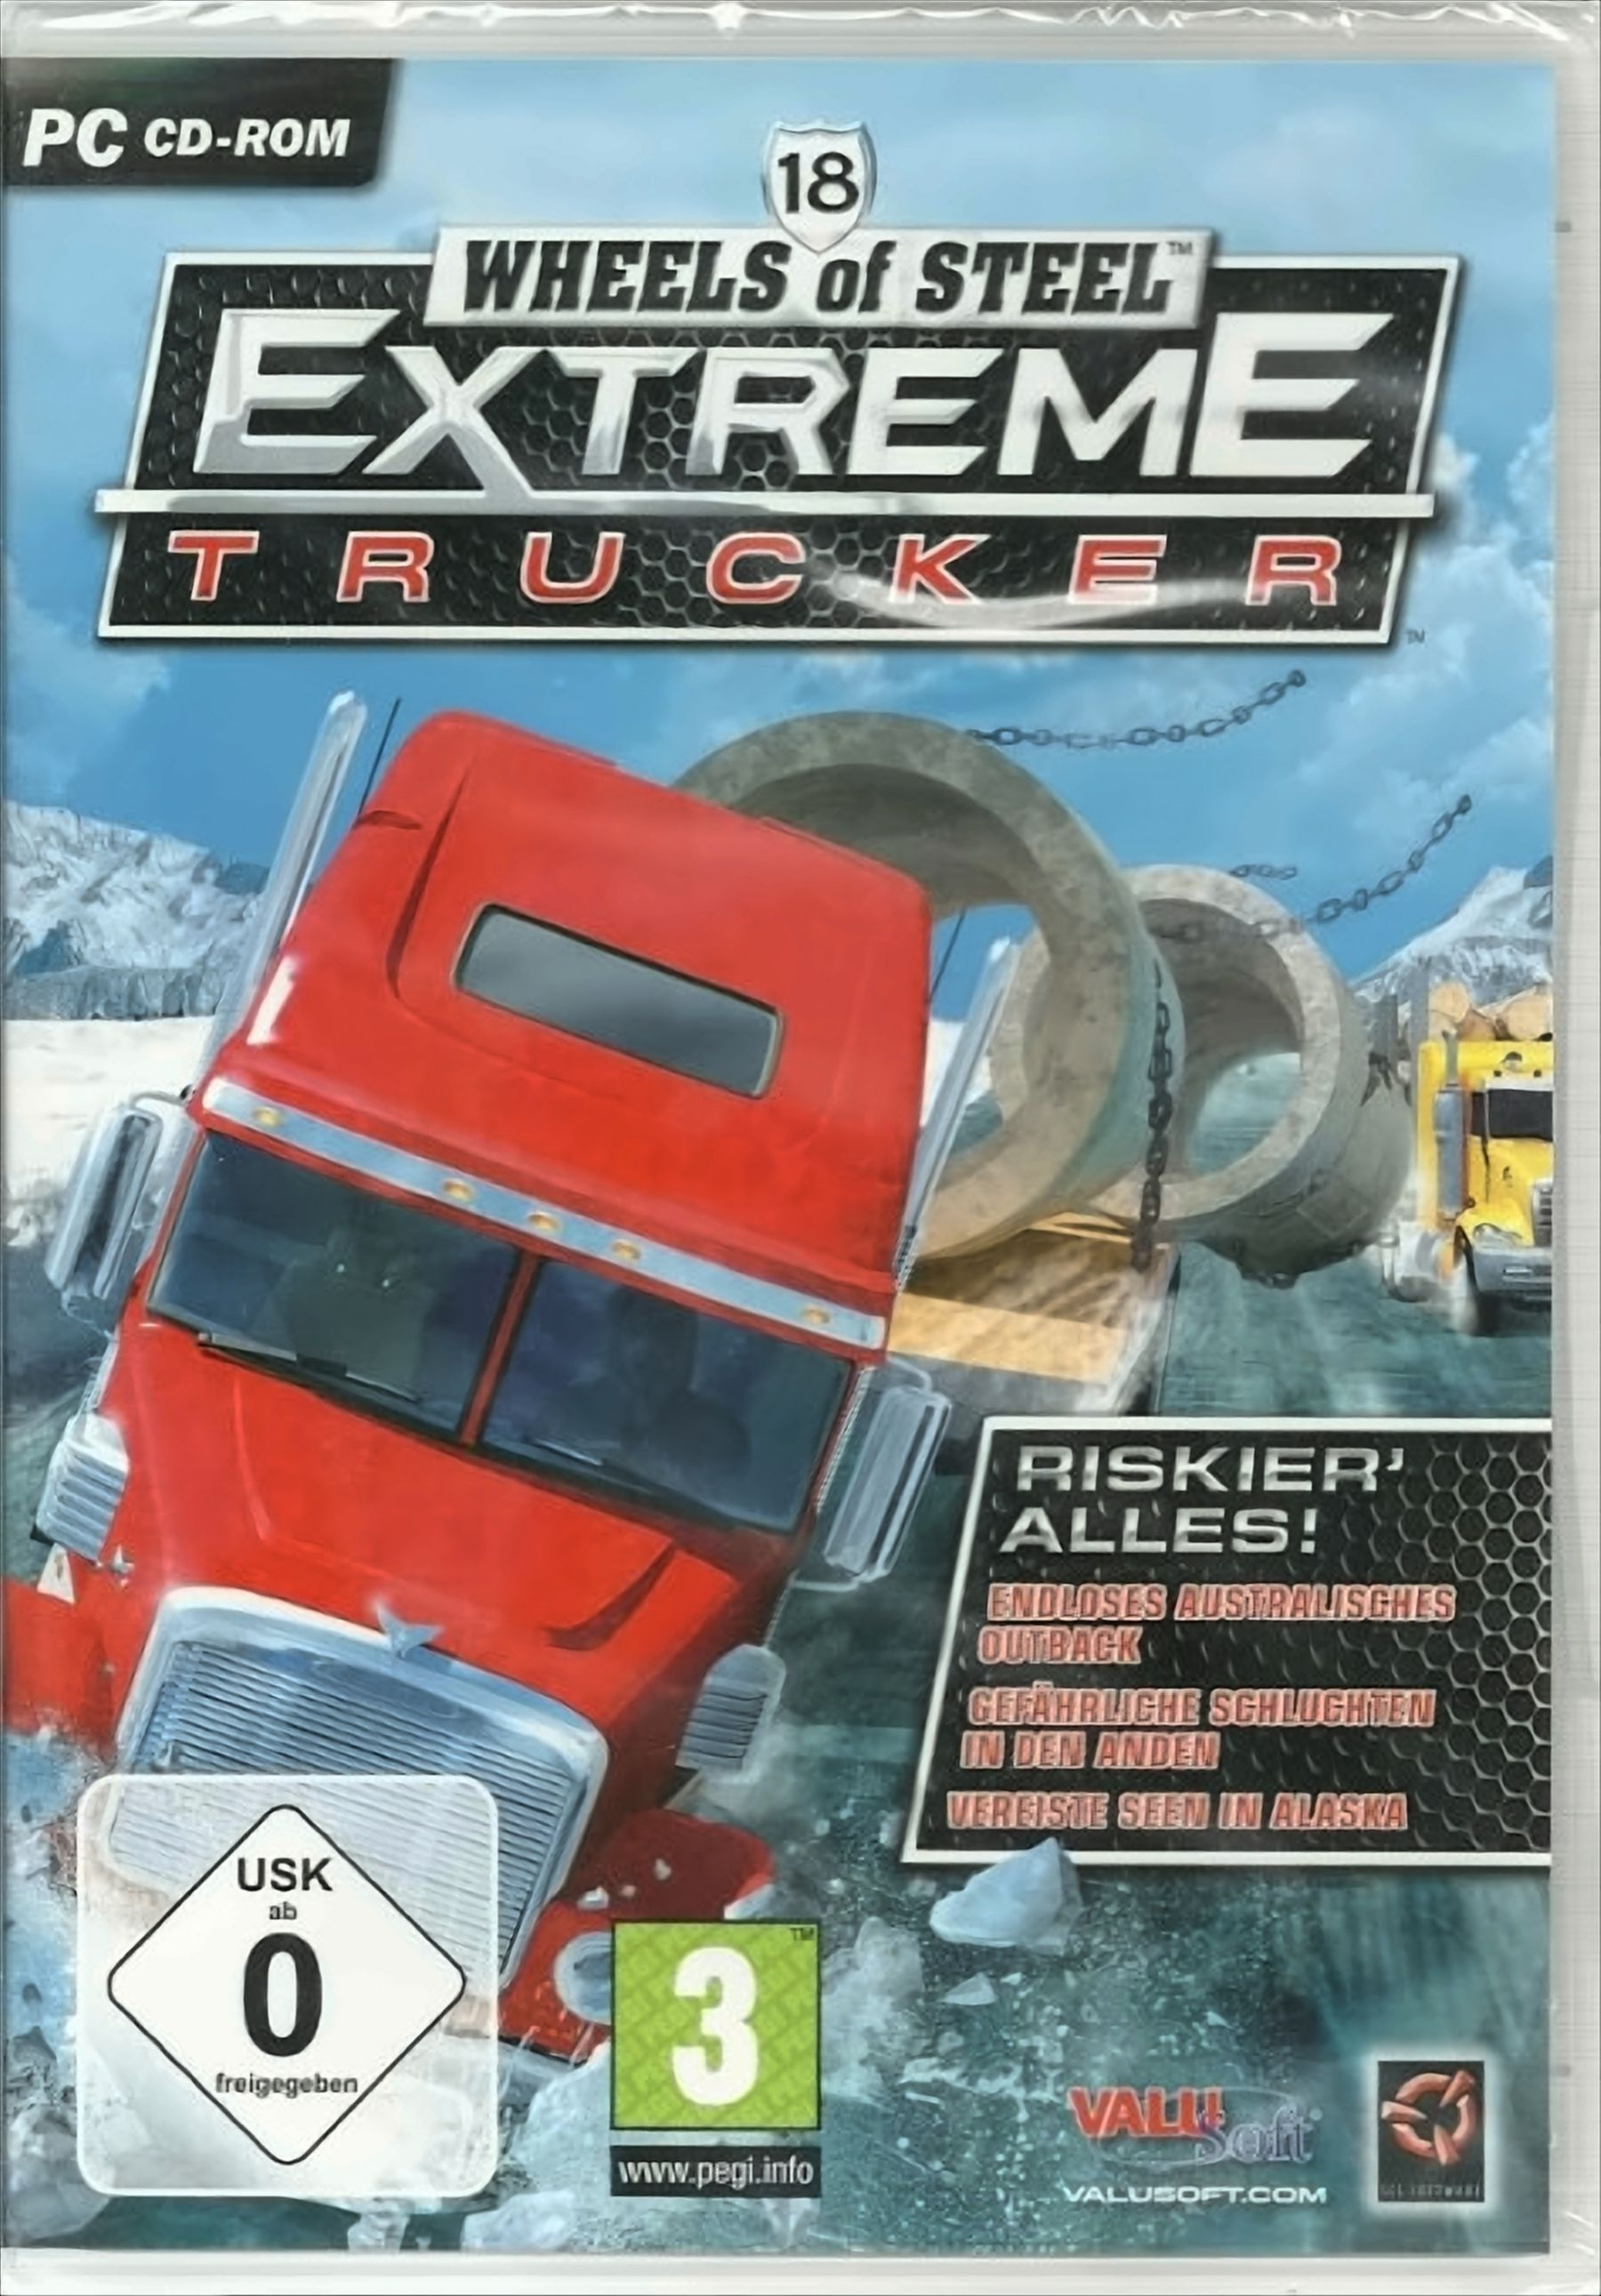 18 Wheels [PC] Extreme of - - Steel Trucker